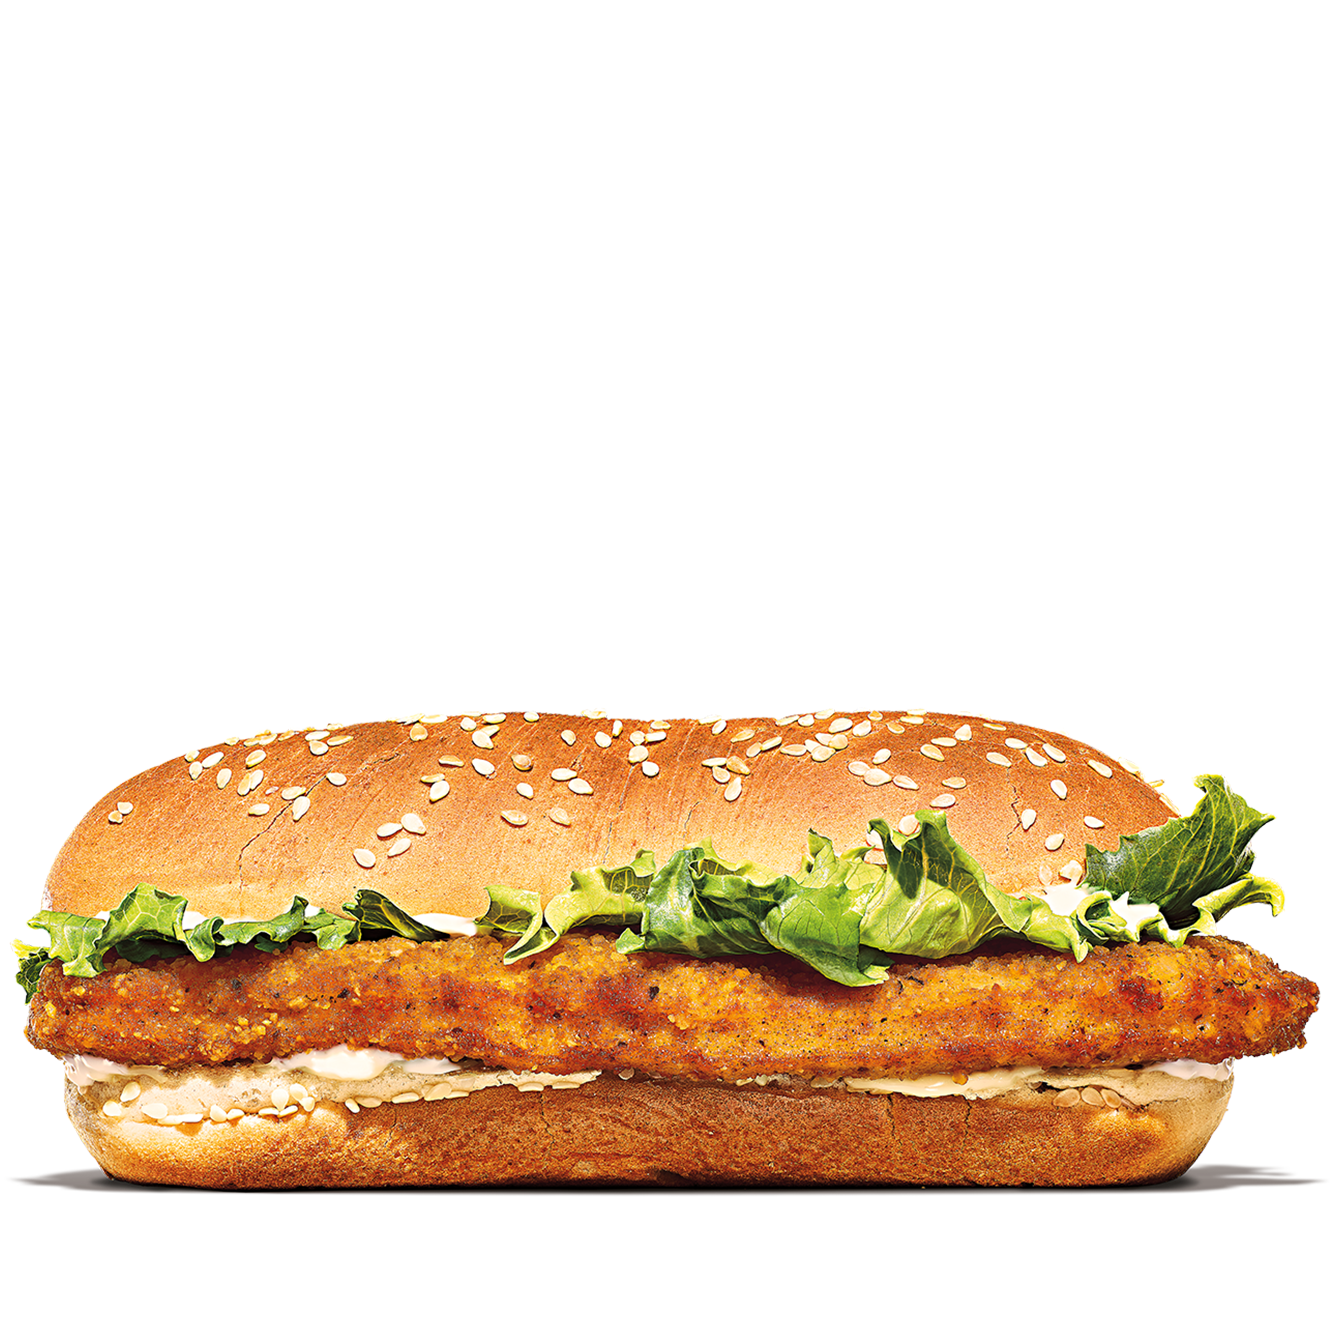 Calories in Burger King Original Chicken